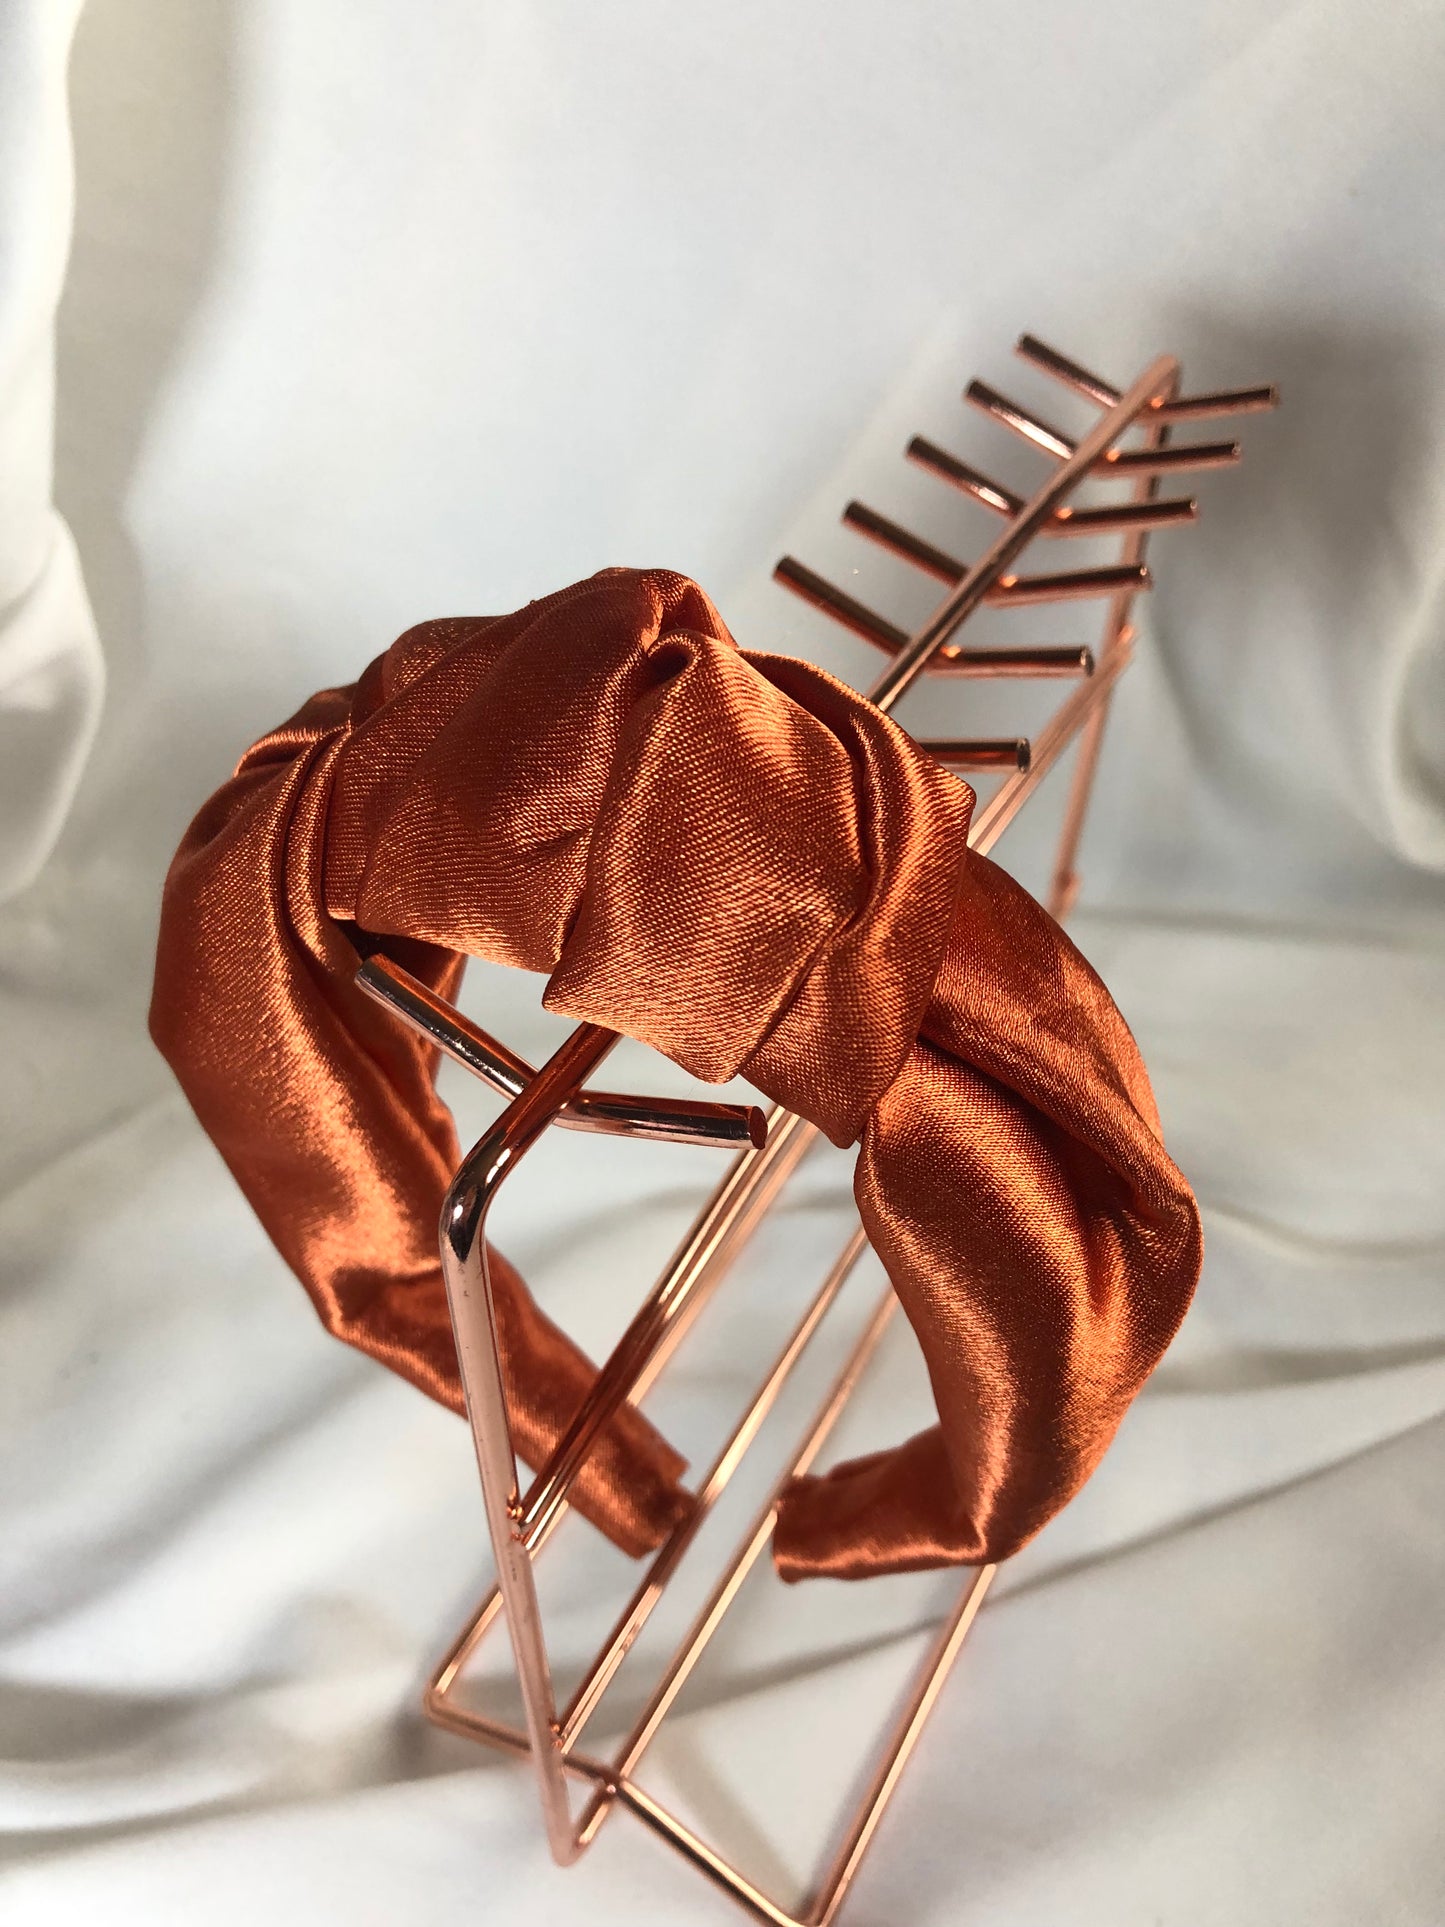 Velma Burnt Orange Satin headband - choose style